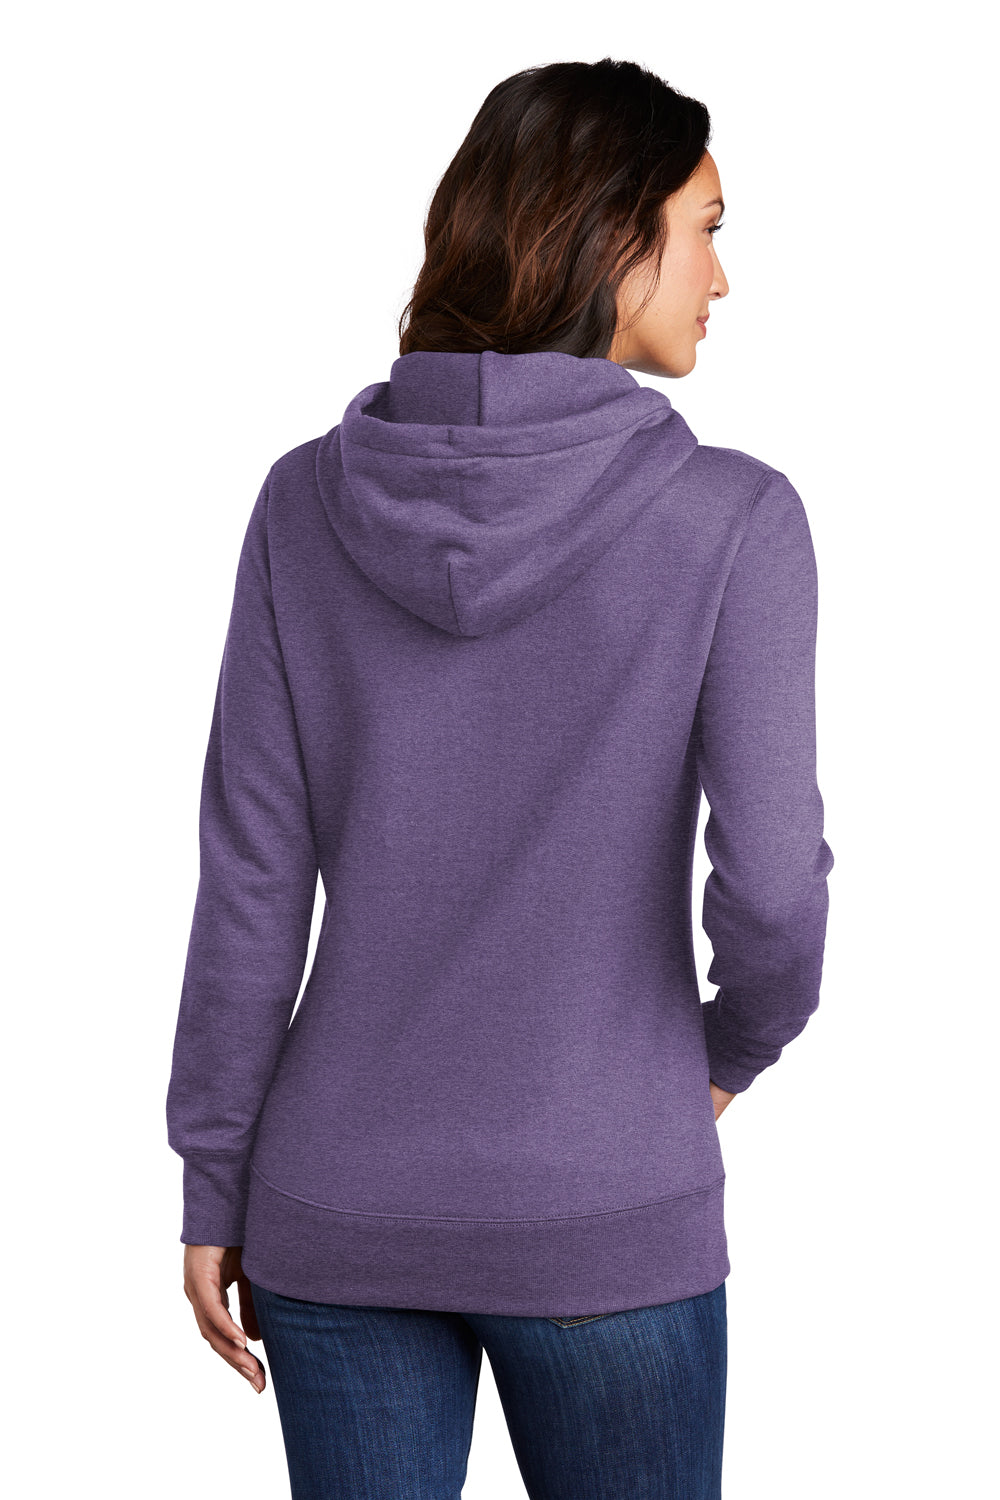 Port & Company Womens Core Fleece Hooded Sweatshirt Hoodie Heather Purple Side